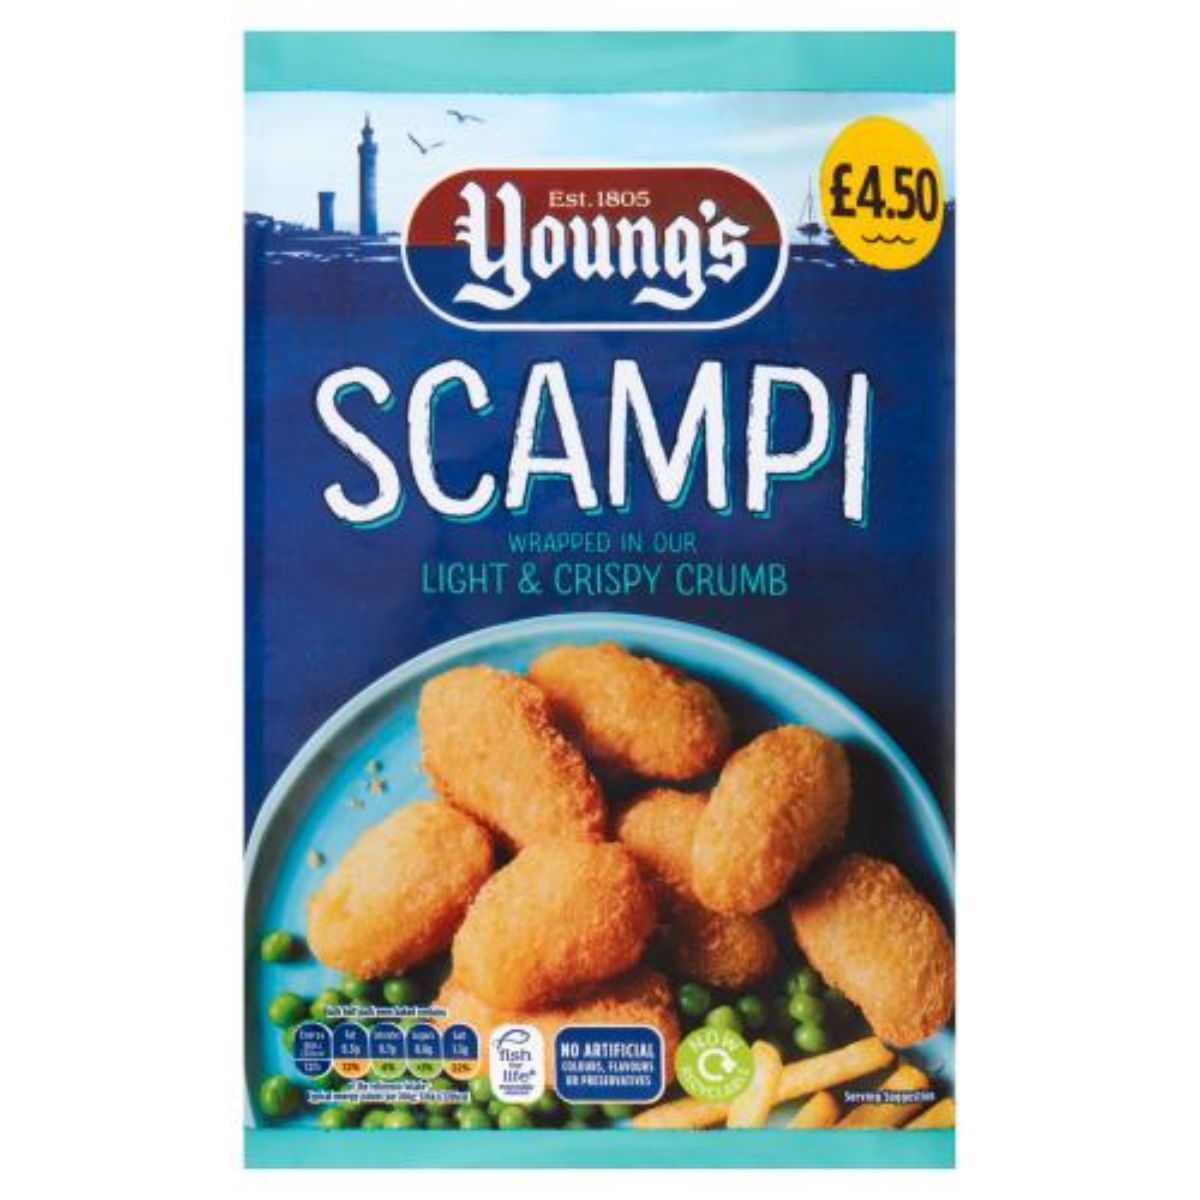 Youngs - Scampi - 220g light & creamy gnocchi.